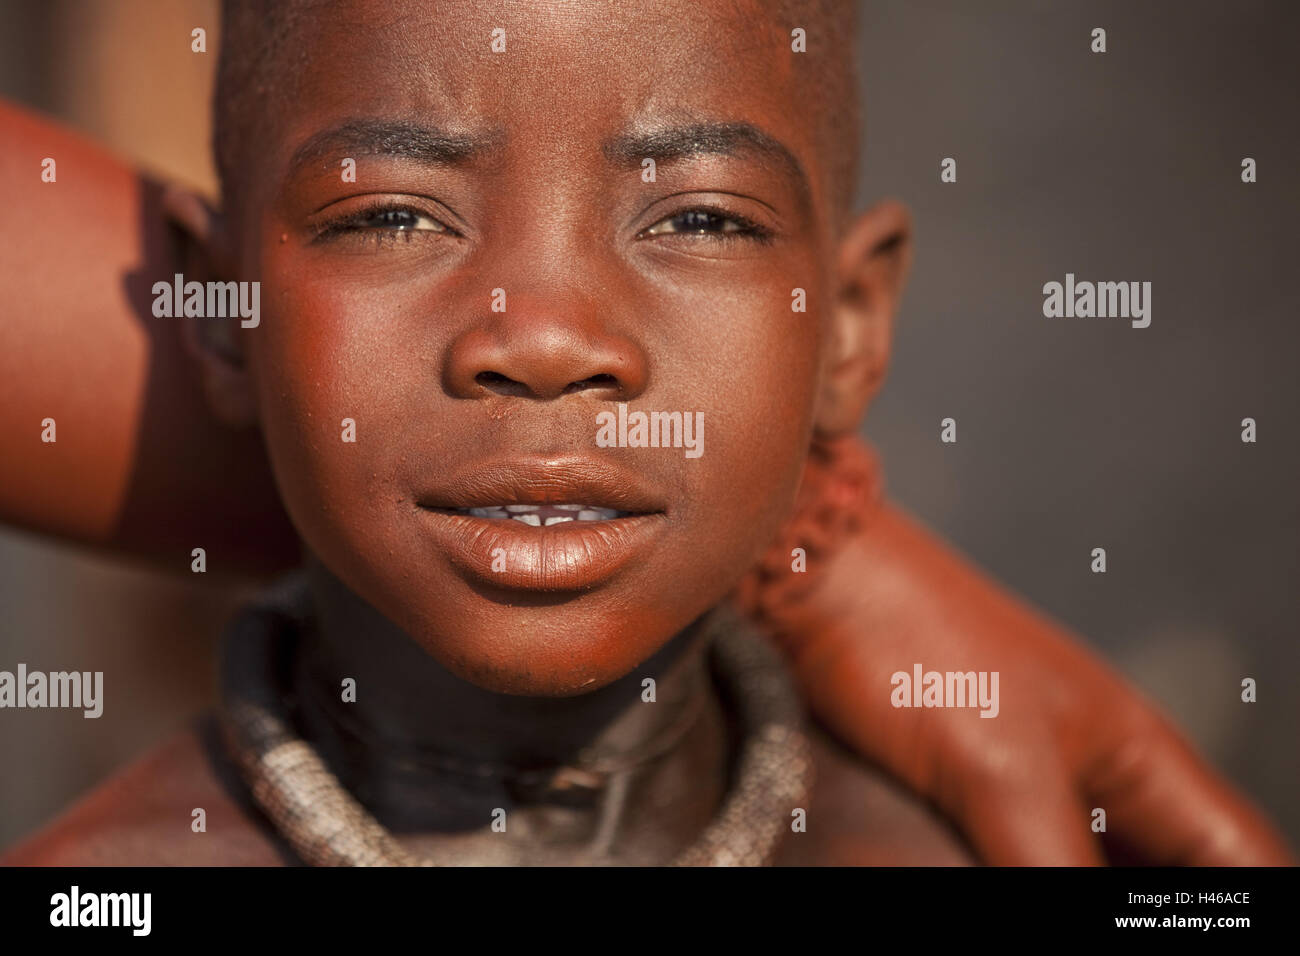 Africa, Namibia, regione di Kunene, Kaokoveld, ragazzo Himba, ritratto, Foto Stock